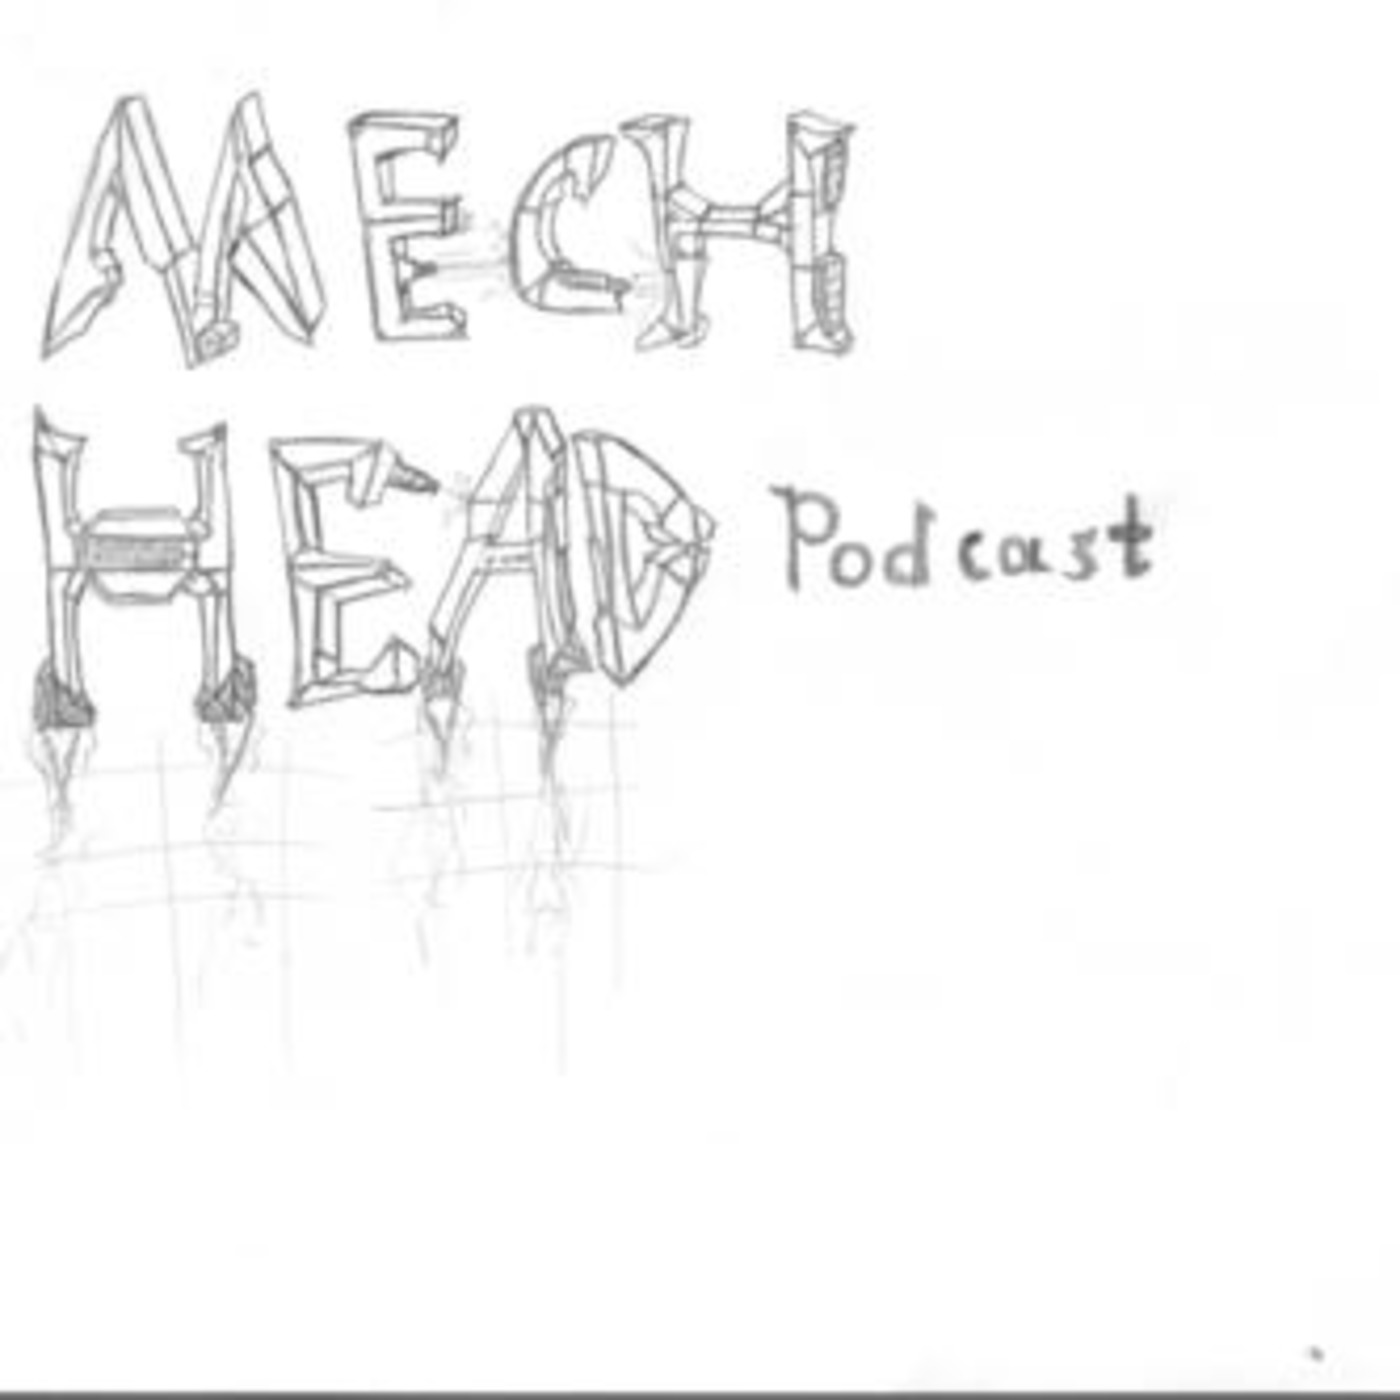 MechHead Podcast #25!